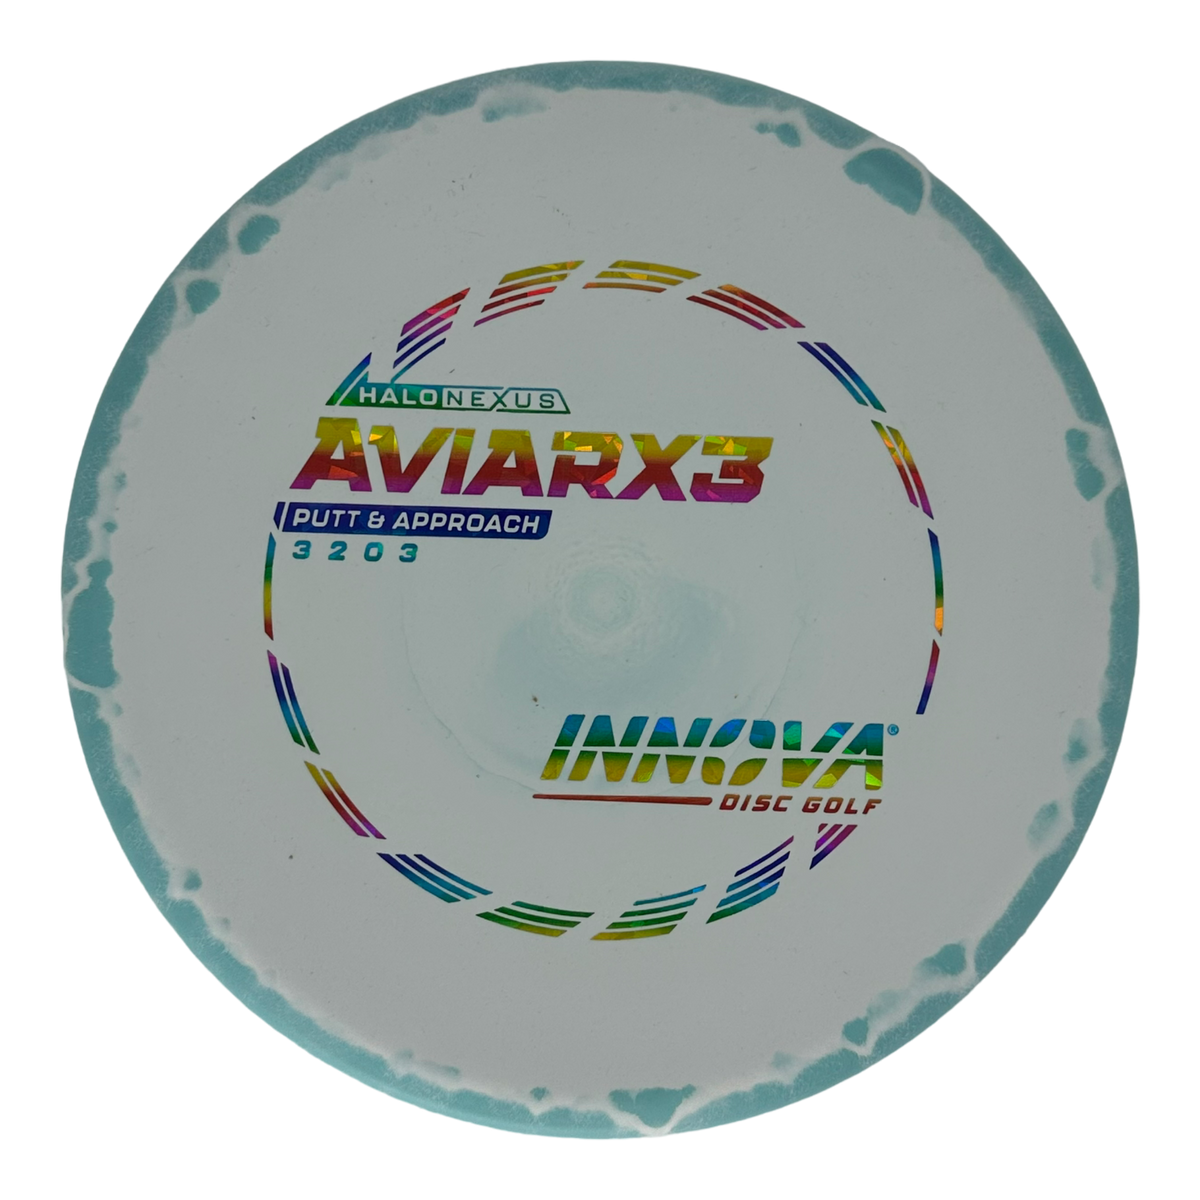 Innova Halo Nexus AviarX3